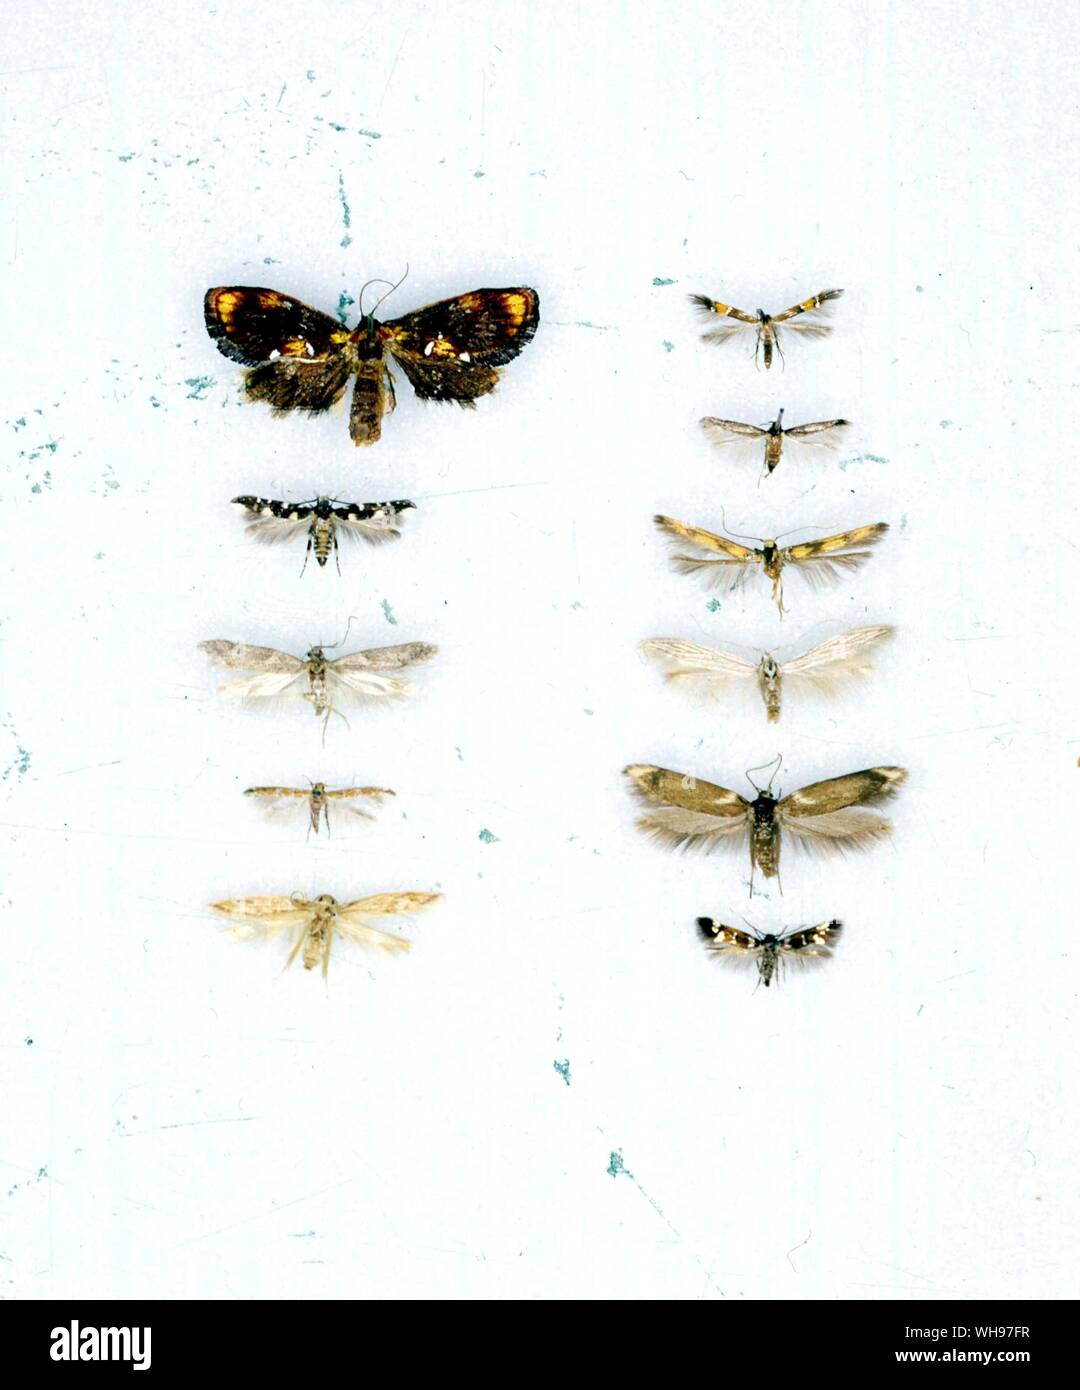 Butterflies/moths - left to right from the top - Sphaerelictis dorothea, Cosmopteryx scribaiella, Trachydora leucobathra, Synplaca gumia, Stathmopoda pedella, Holocera iceryaeela, Coleophora virgatella, Sathrobrota rileyi, Scythris cuspidella, Agonoxena argaula, Elachista regificella Stock Photo